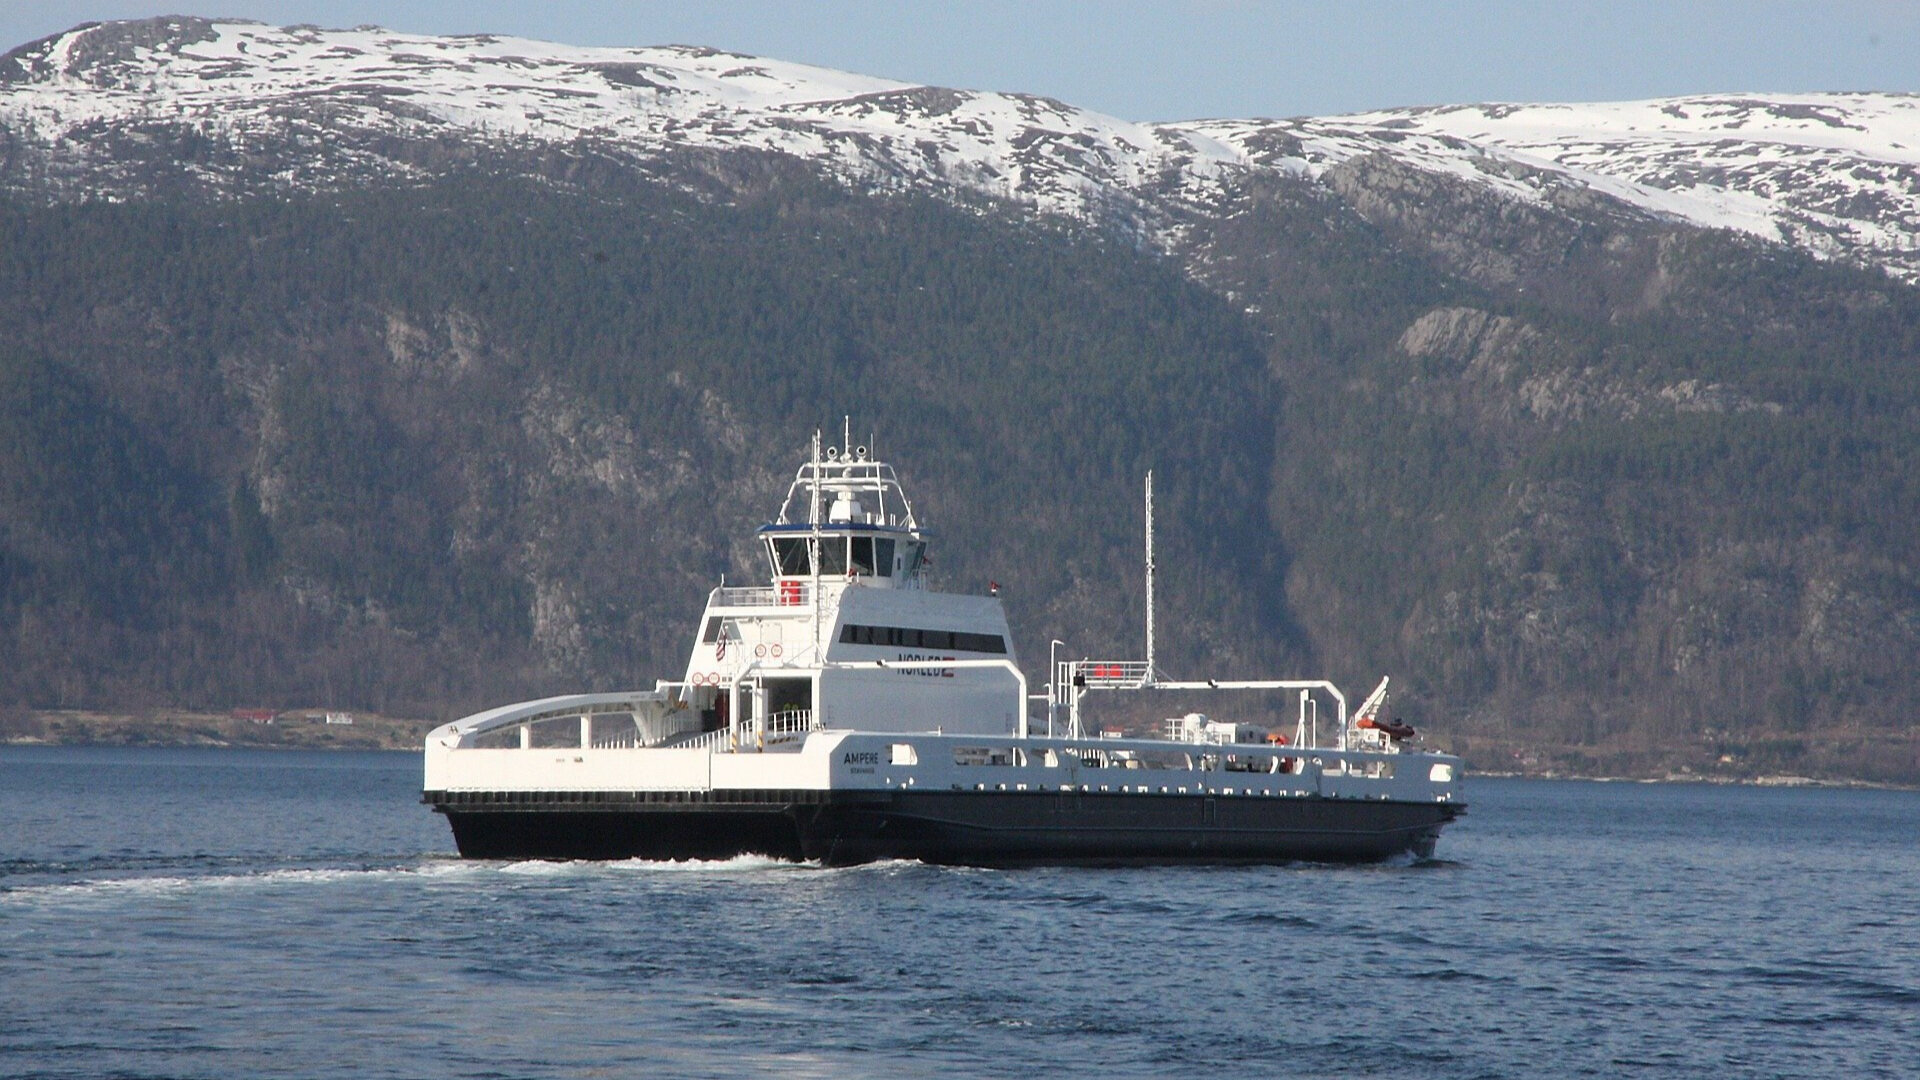 MF "Lifjord" - shuttle ferries